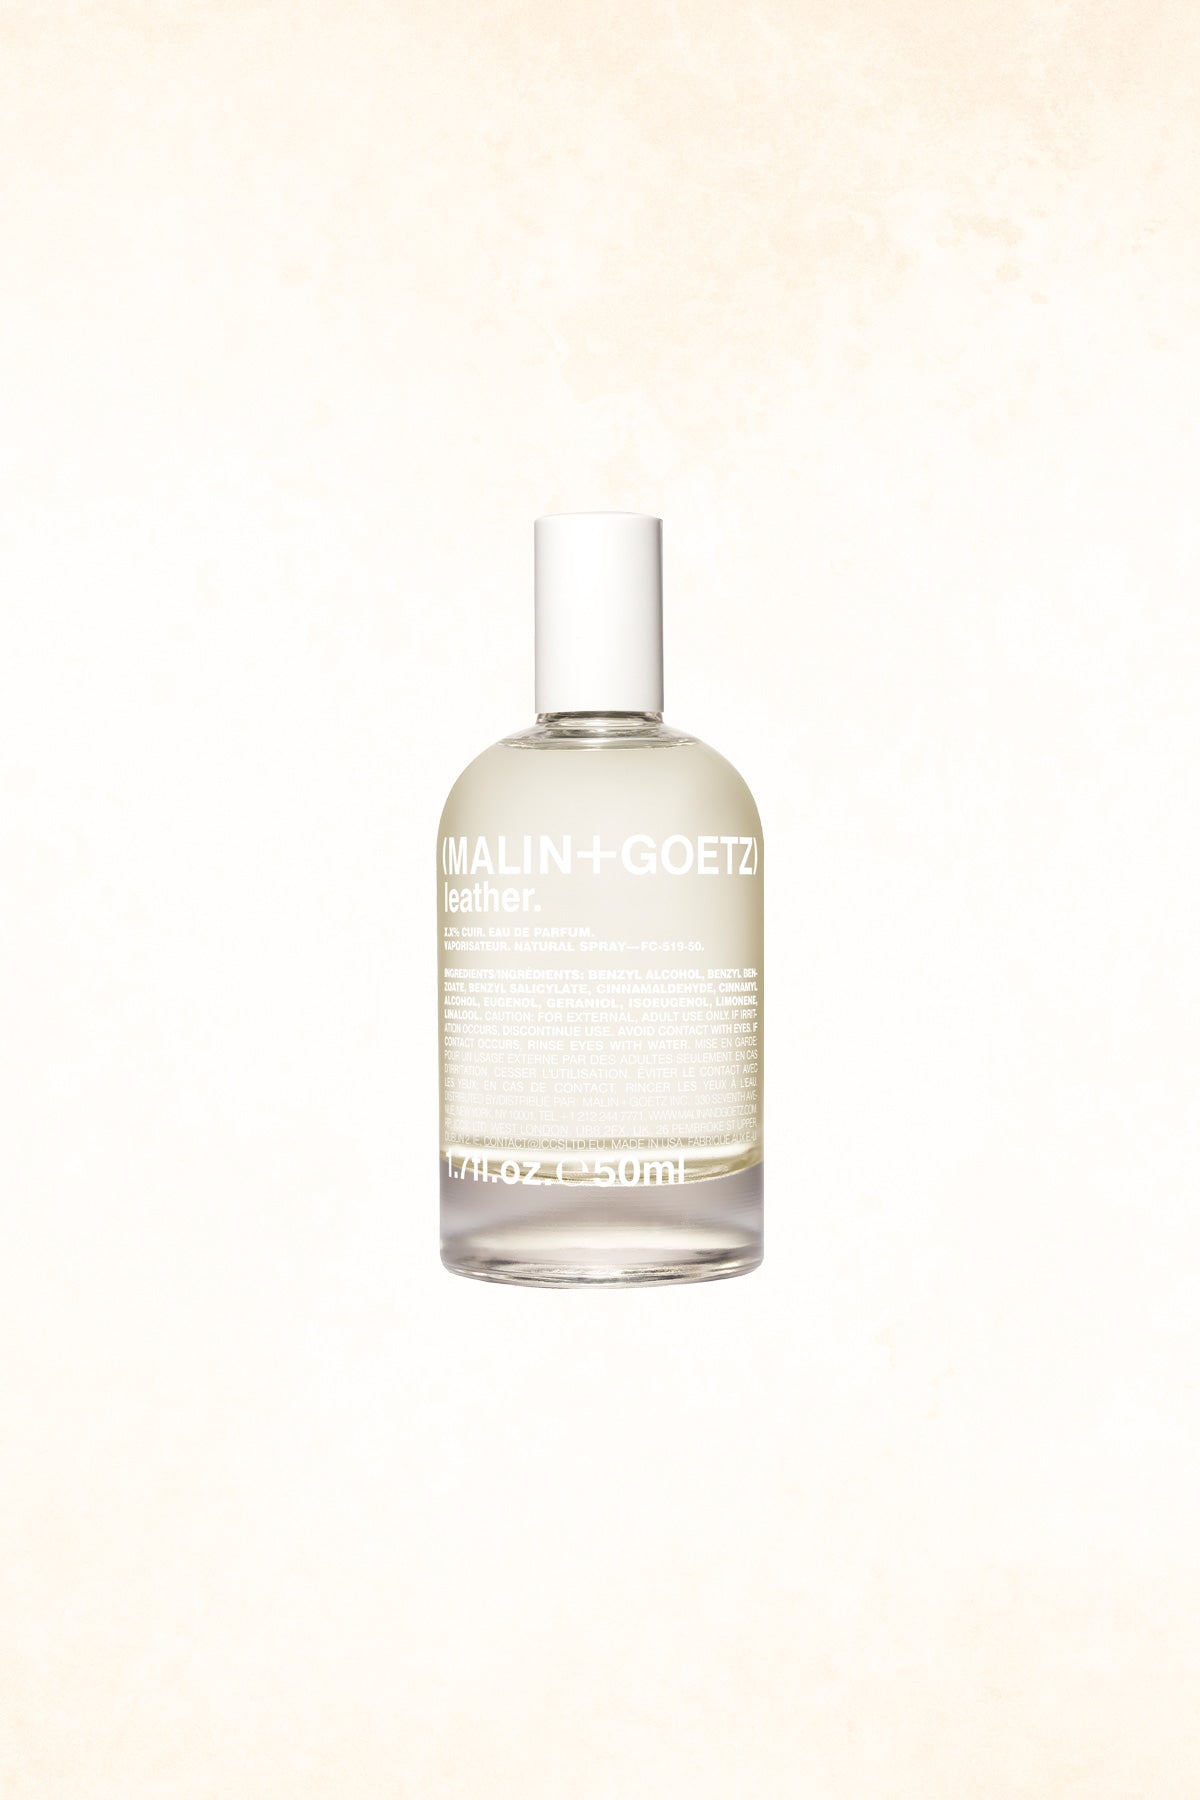 Malin+Goetz – Leather Eau De Parfum 1.7 oz / 50 ml